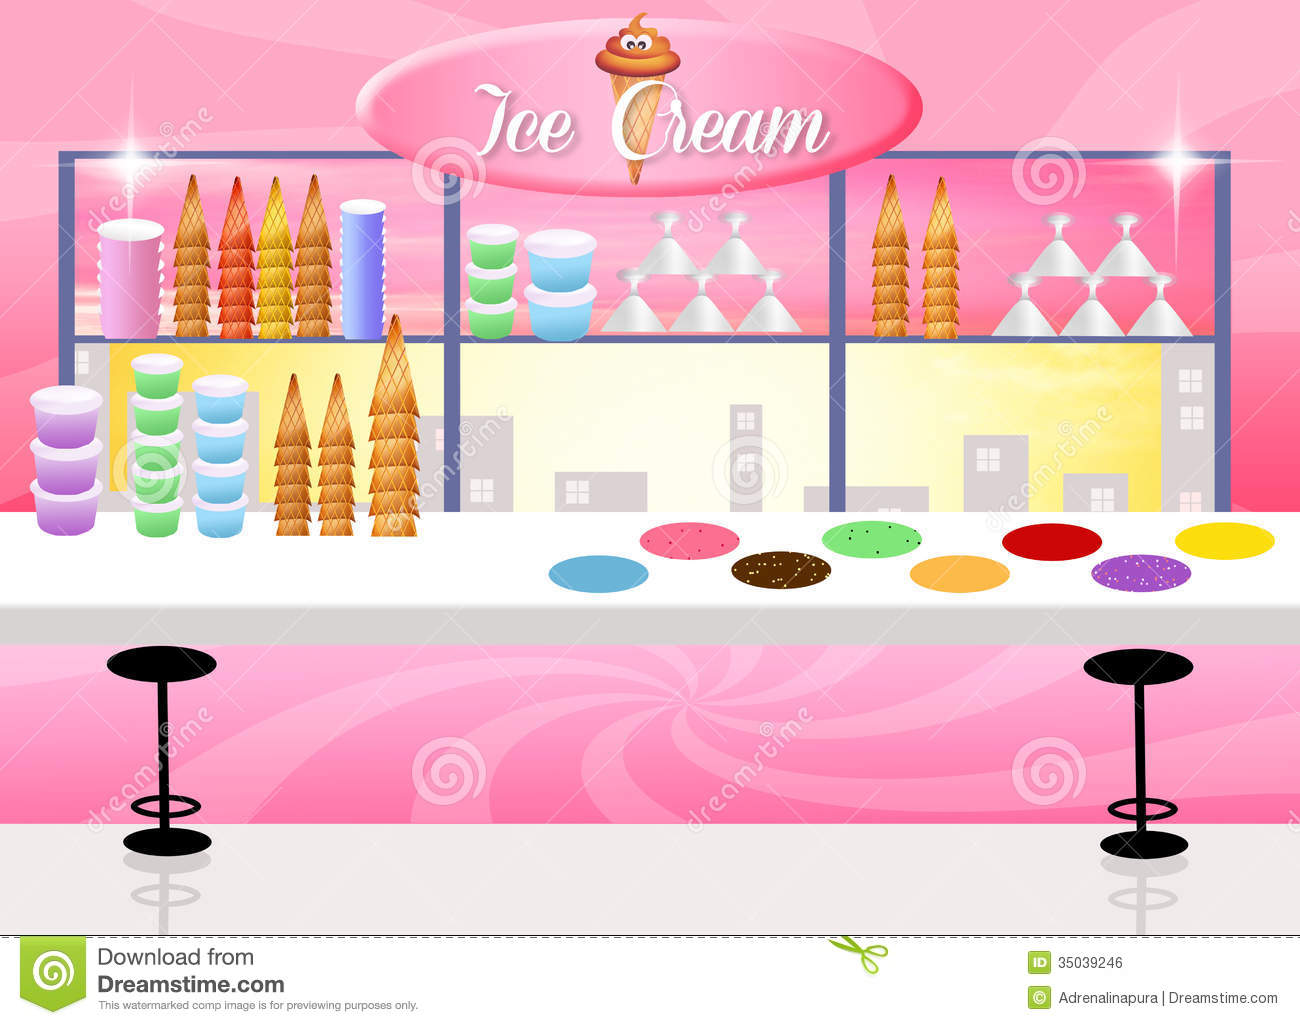 Ice Cream Shop Royalty Free Stock Image   Image  35039246